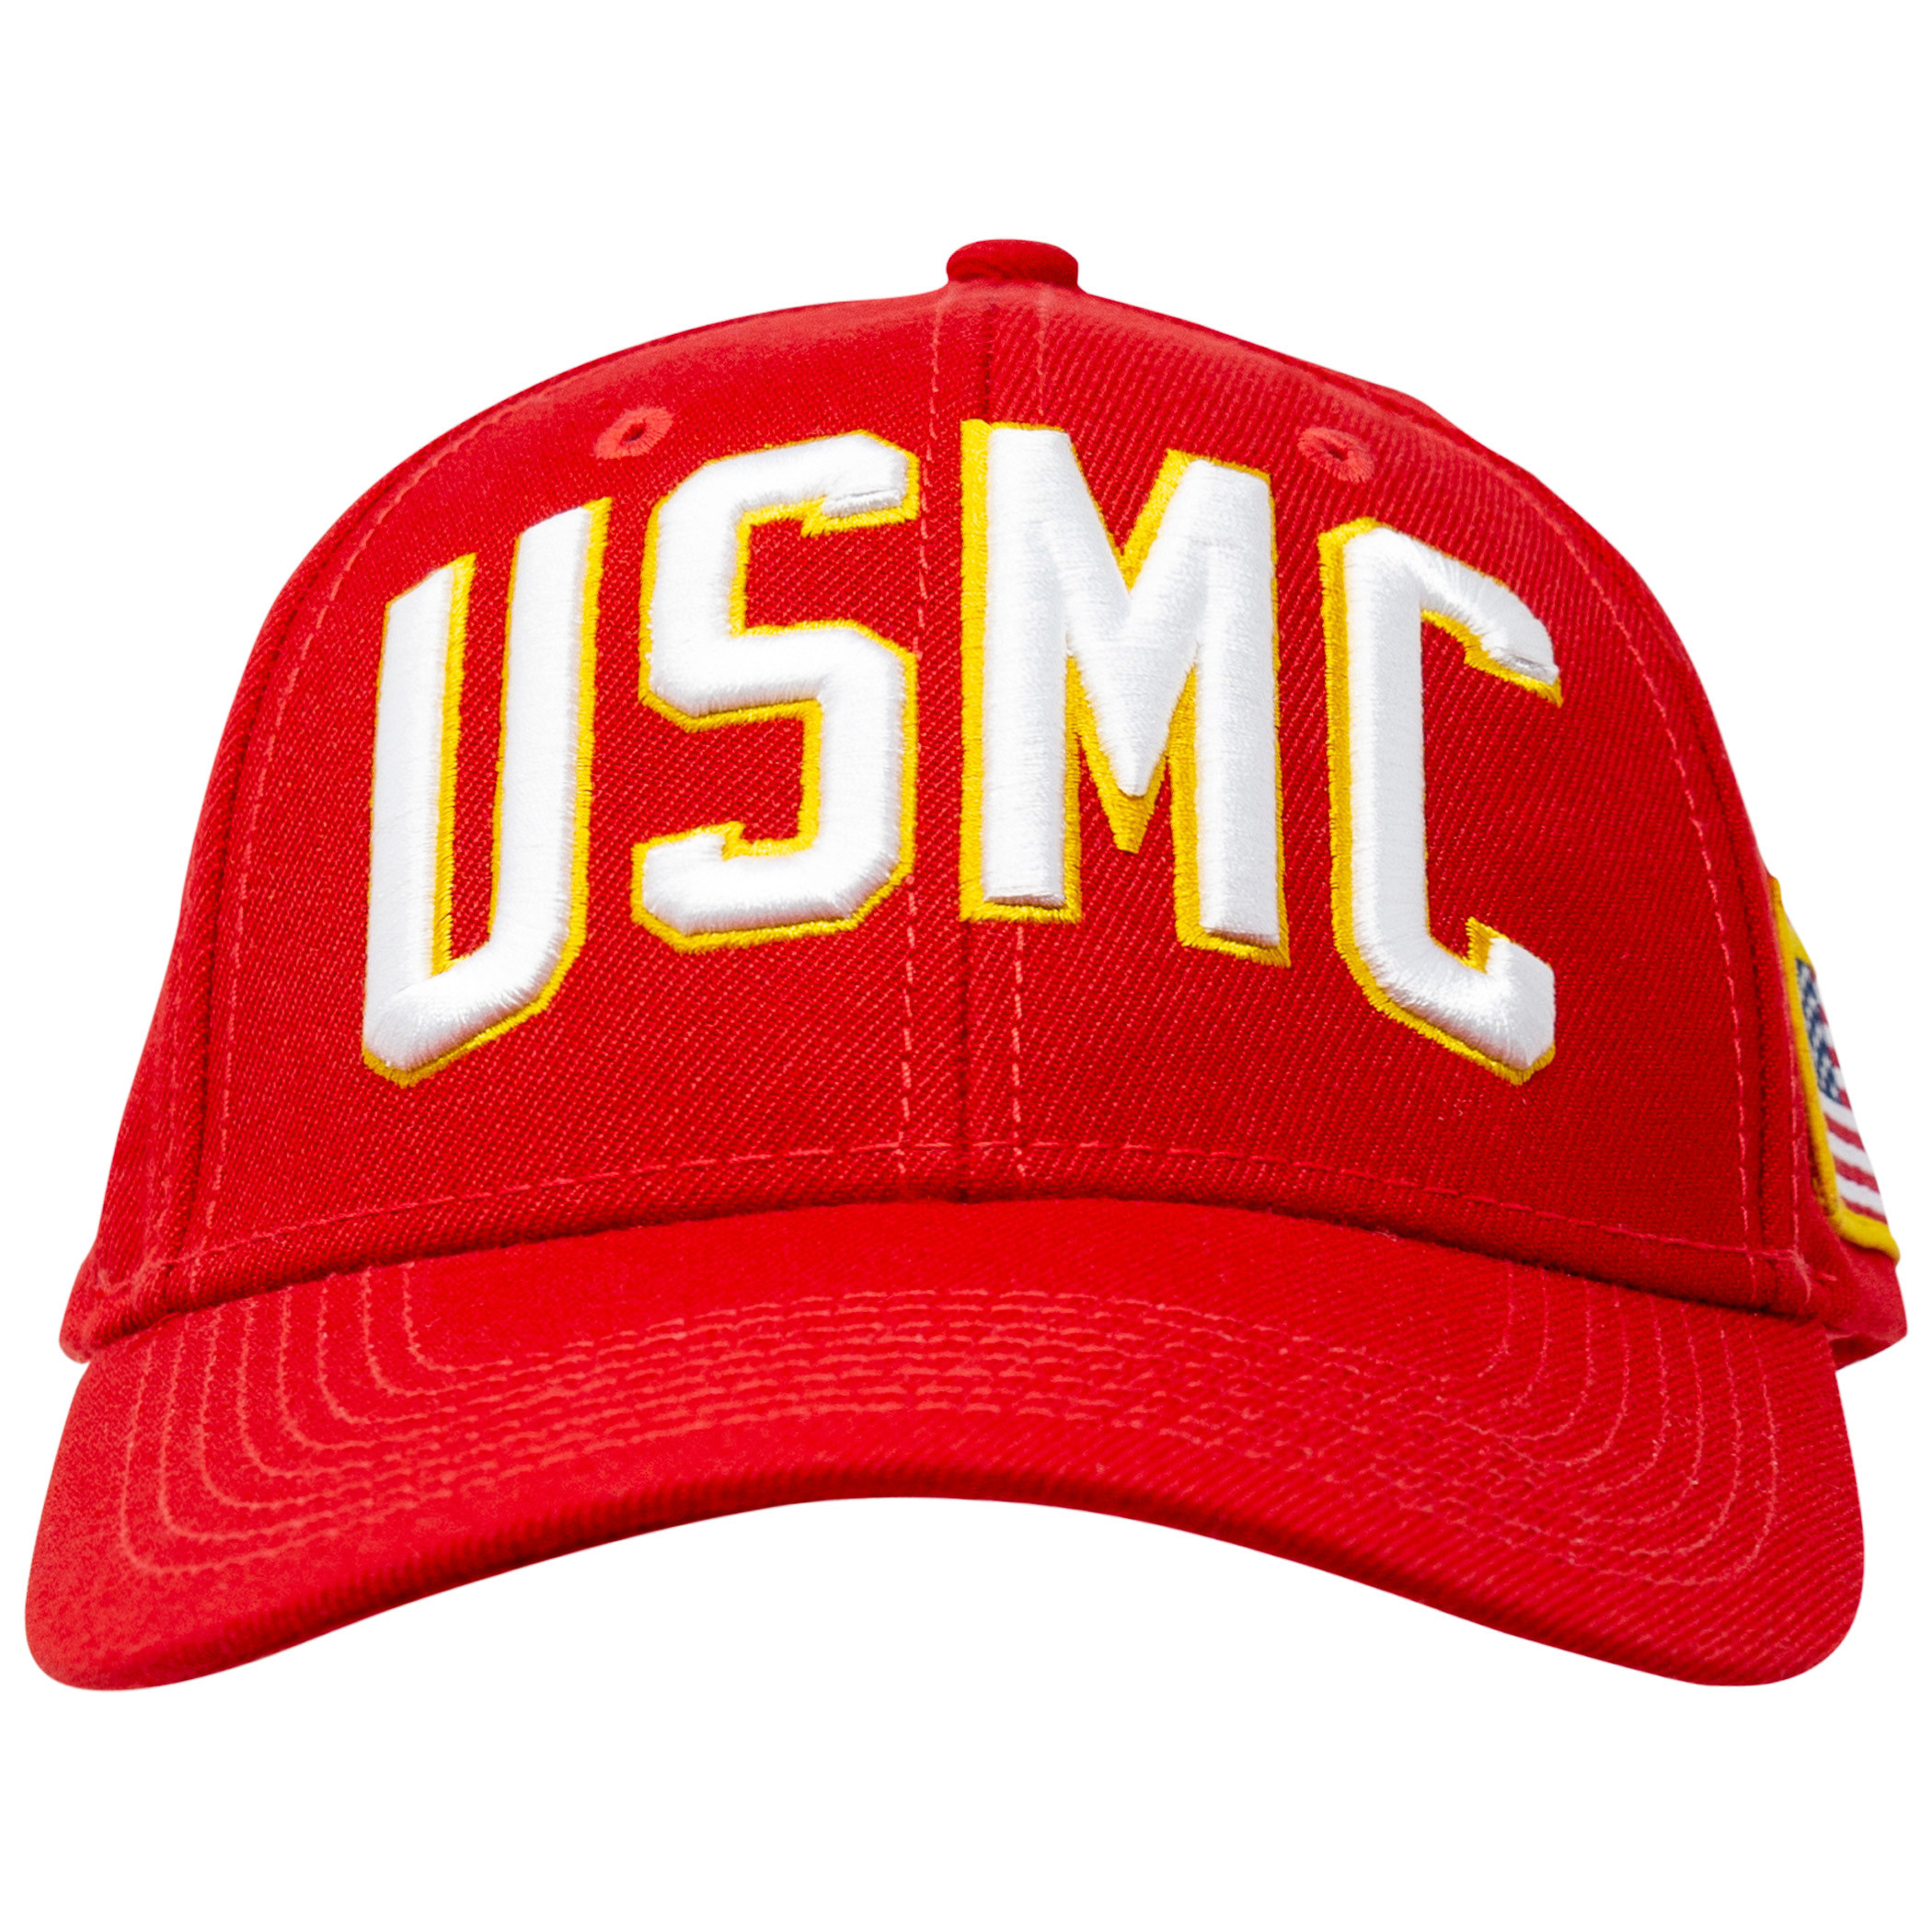 USMC Adjustable Red Snapback Hat - image 2 of 5